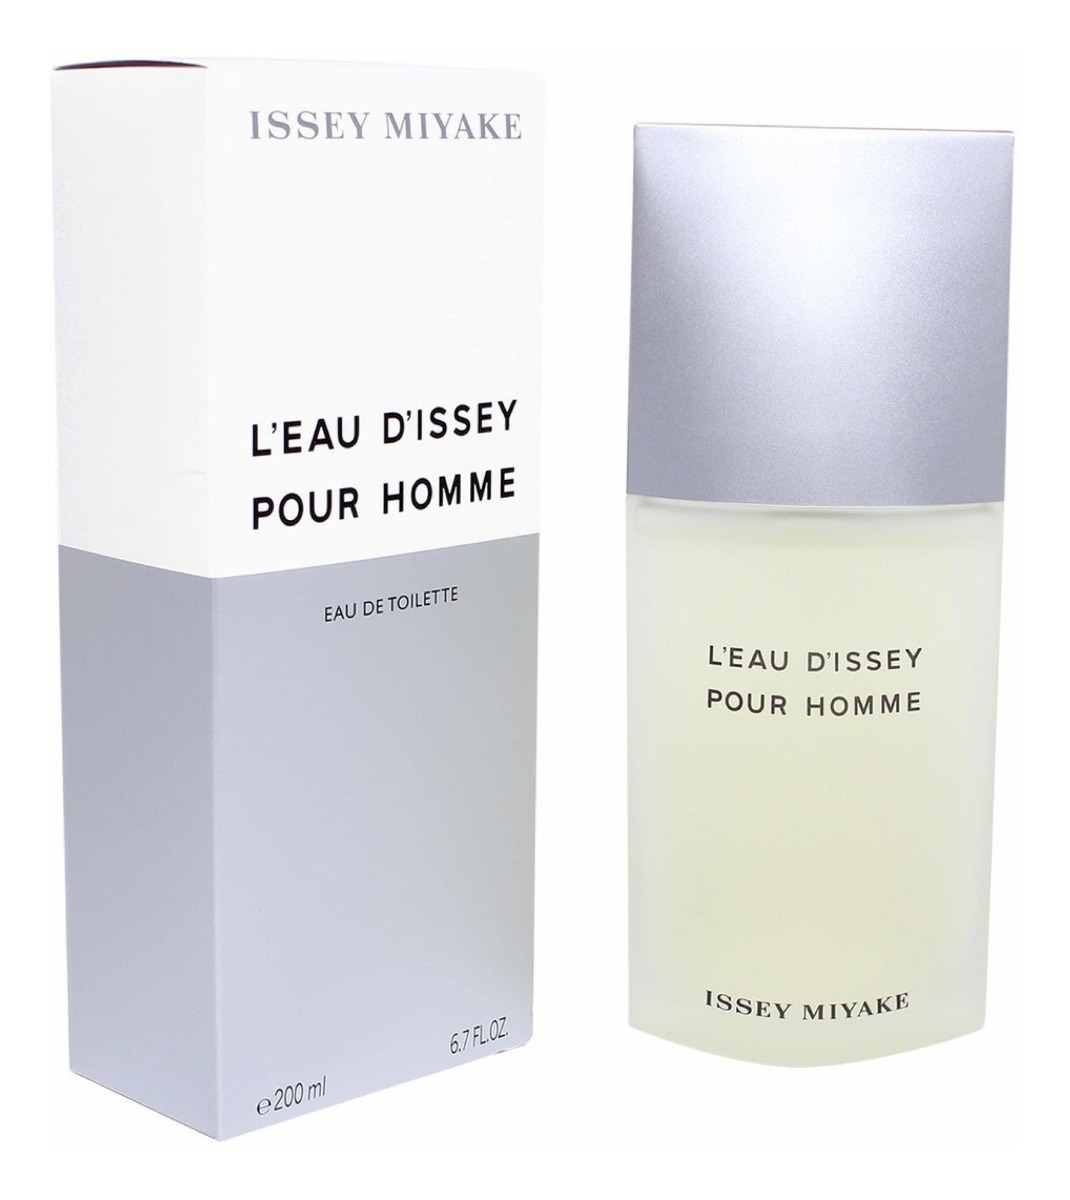 Perfume Issey Miyake 200 Ml Hombre - L a $800 - $ 159.900 en Mercado Libre